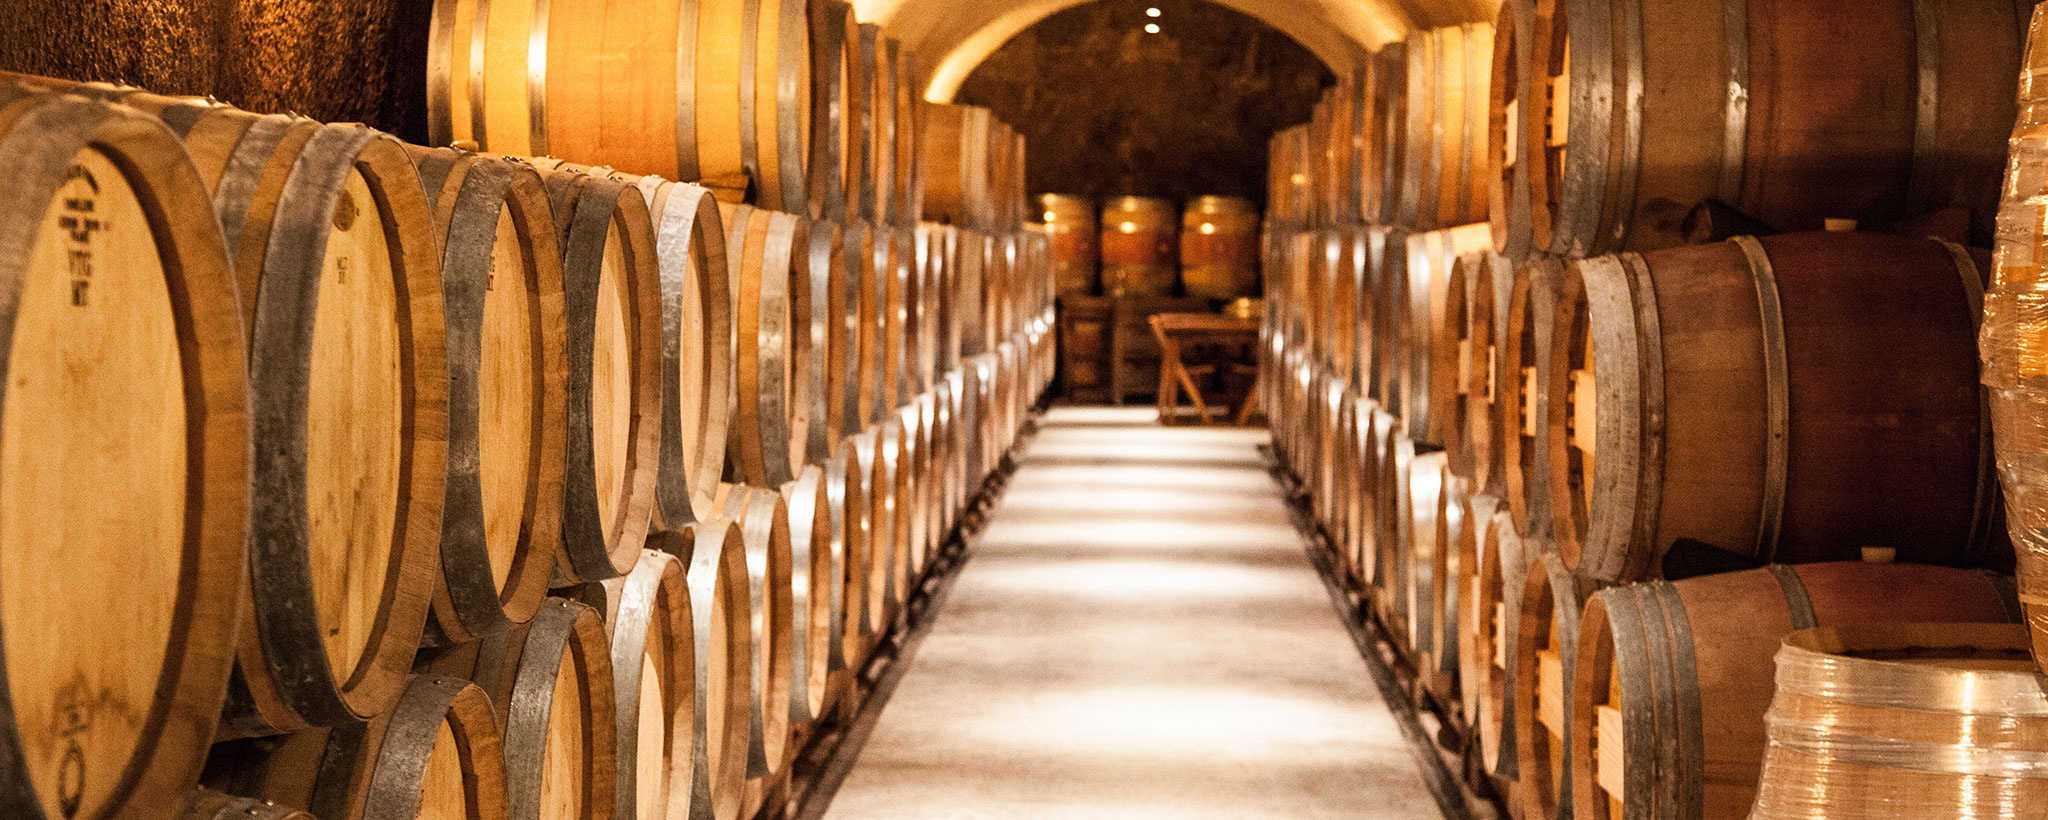 wine storage barrels